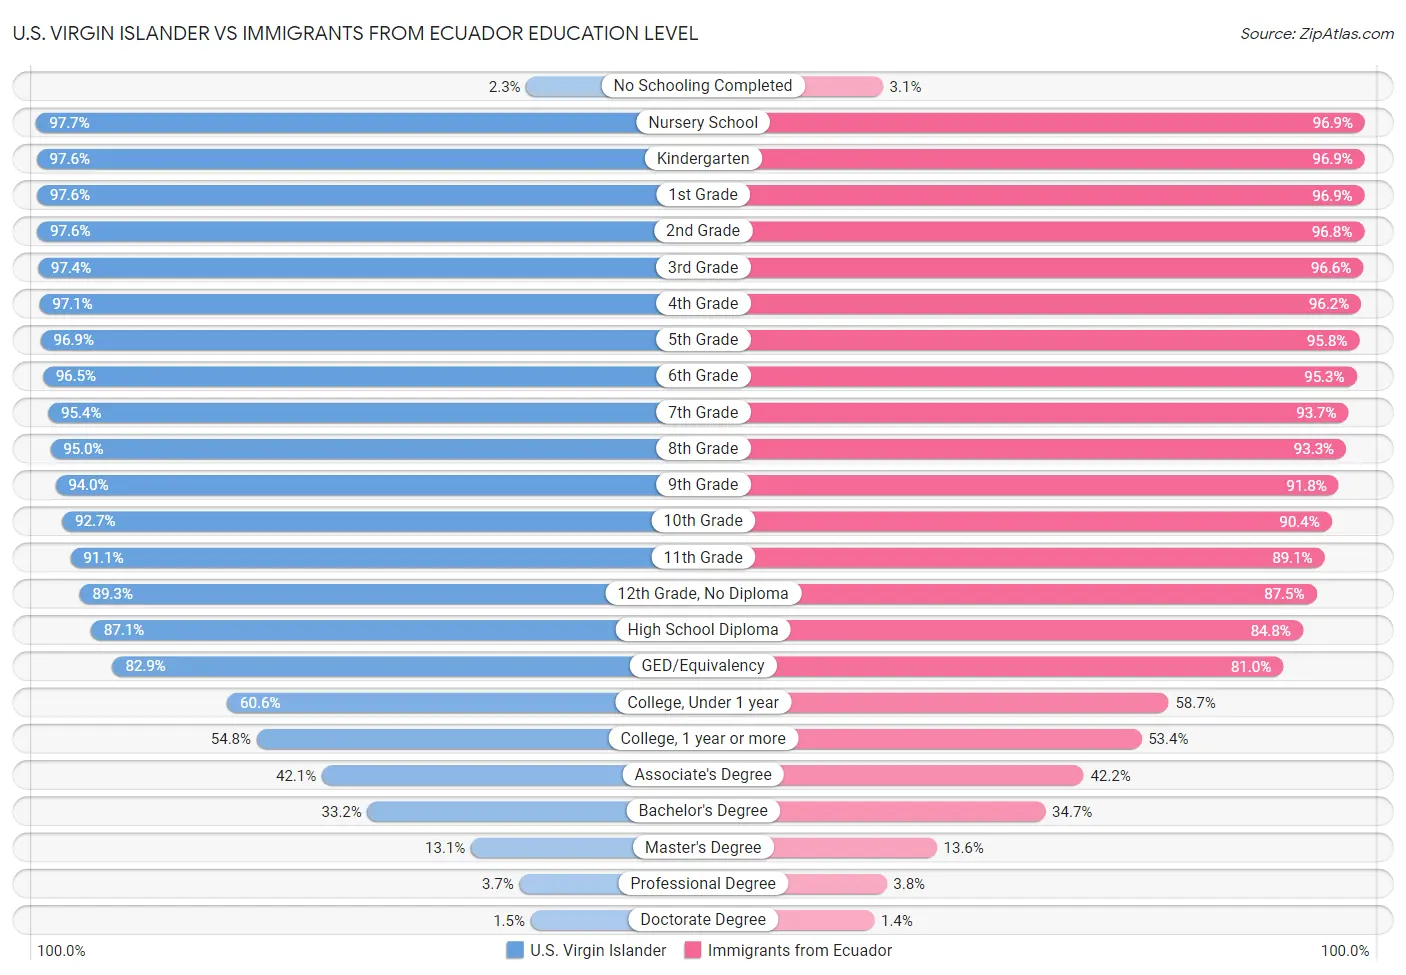 U.S. Virgin Islander vs Immigrants from Ecuador Education Level